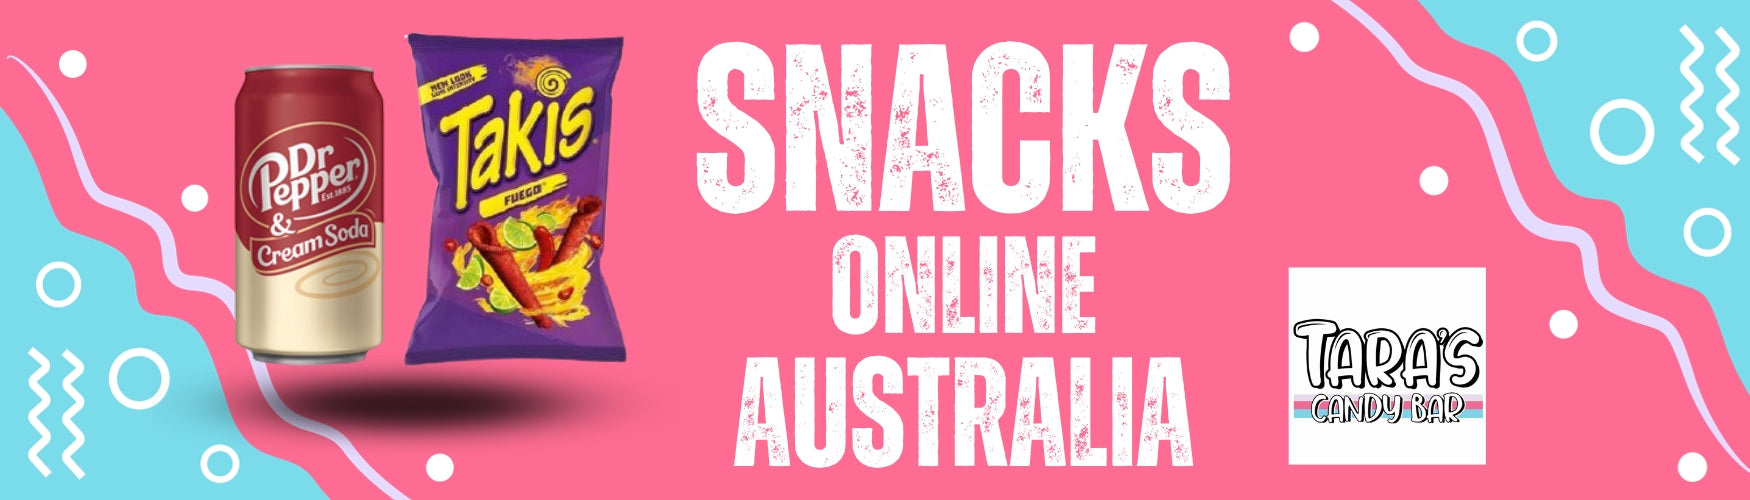 Snacks Online Australia 